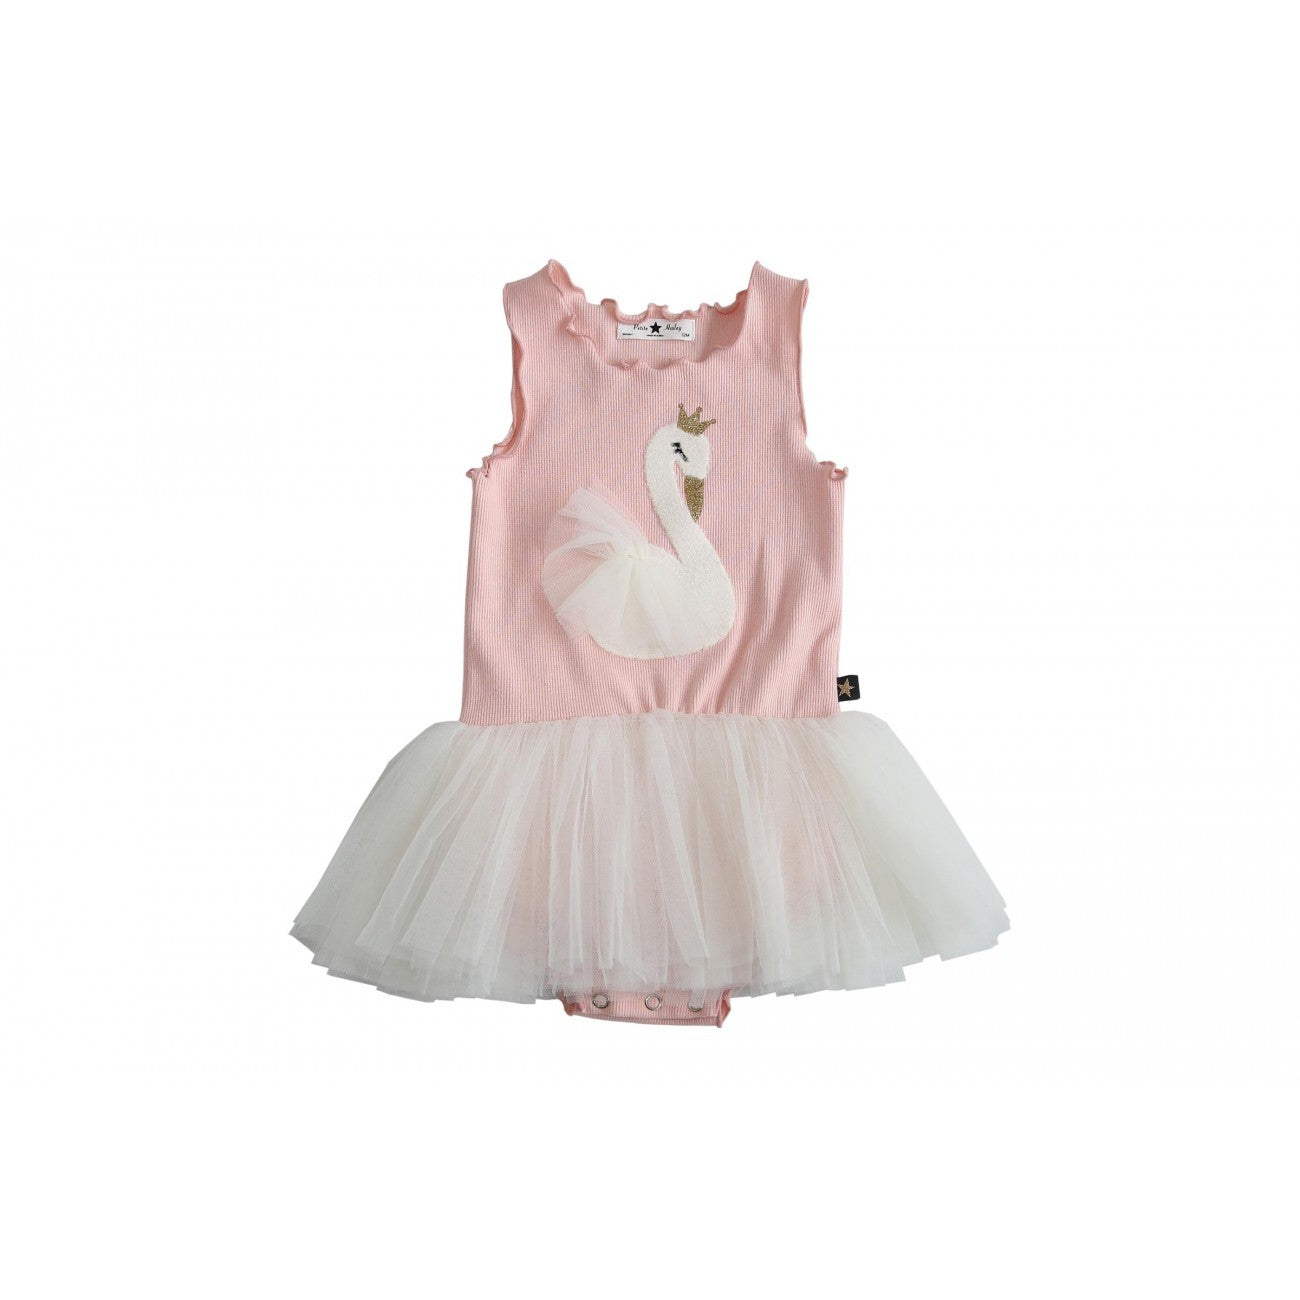 Swan Baby Tutu Dress